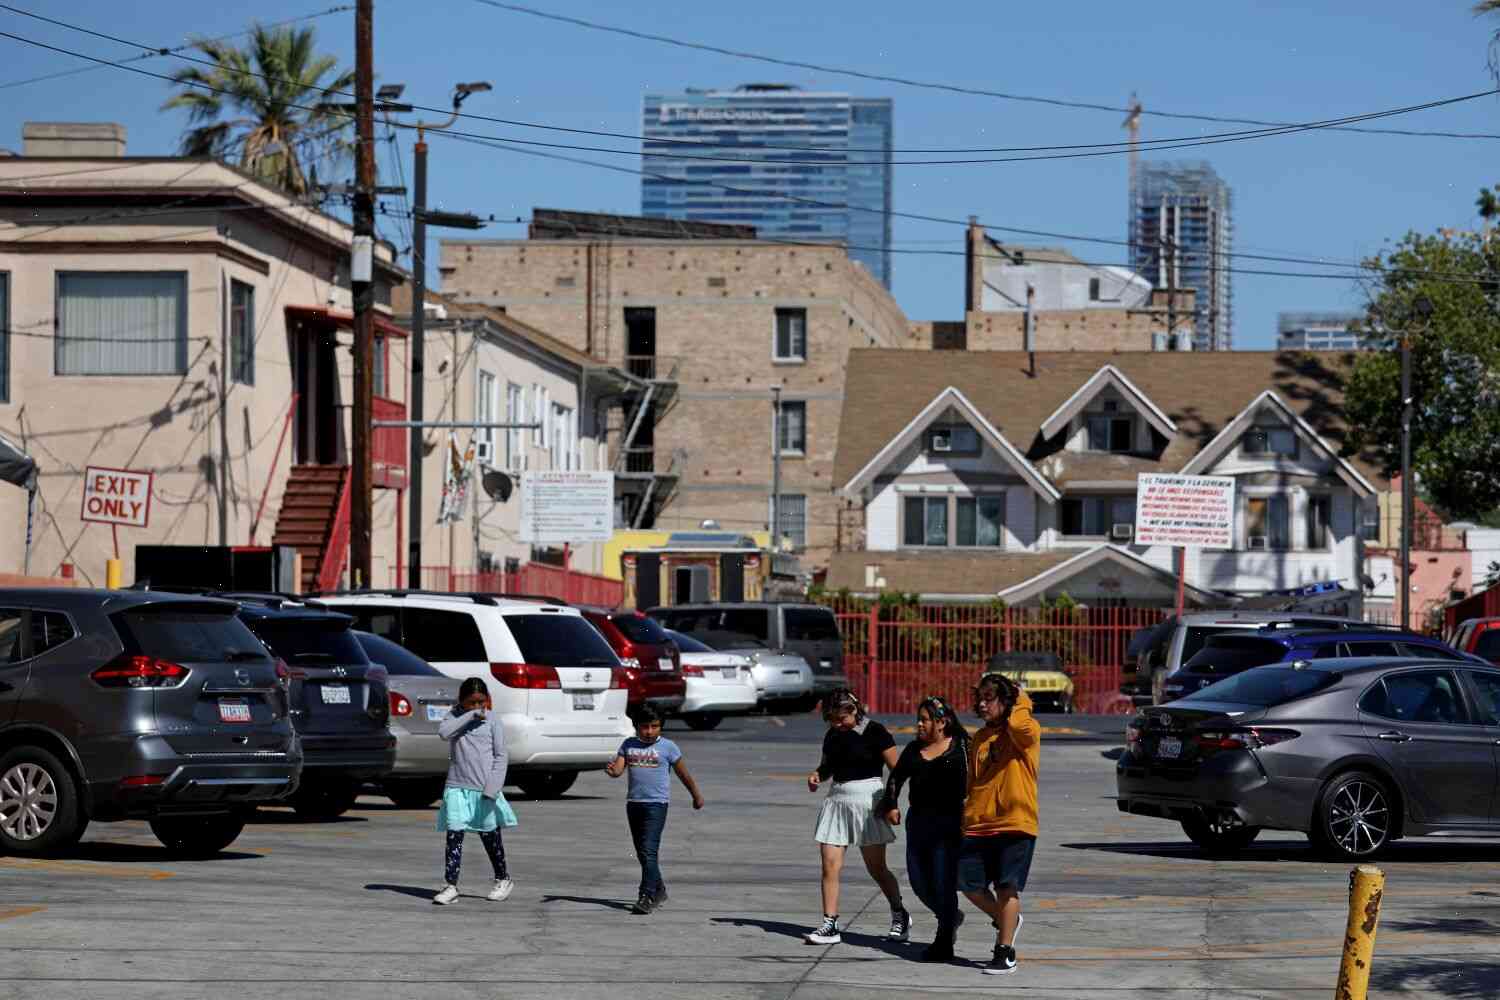 The Los Angeles Housing and Community Development Initiative is a multi-billion dollar problem